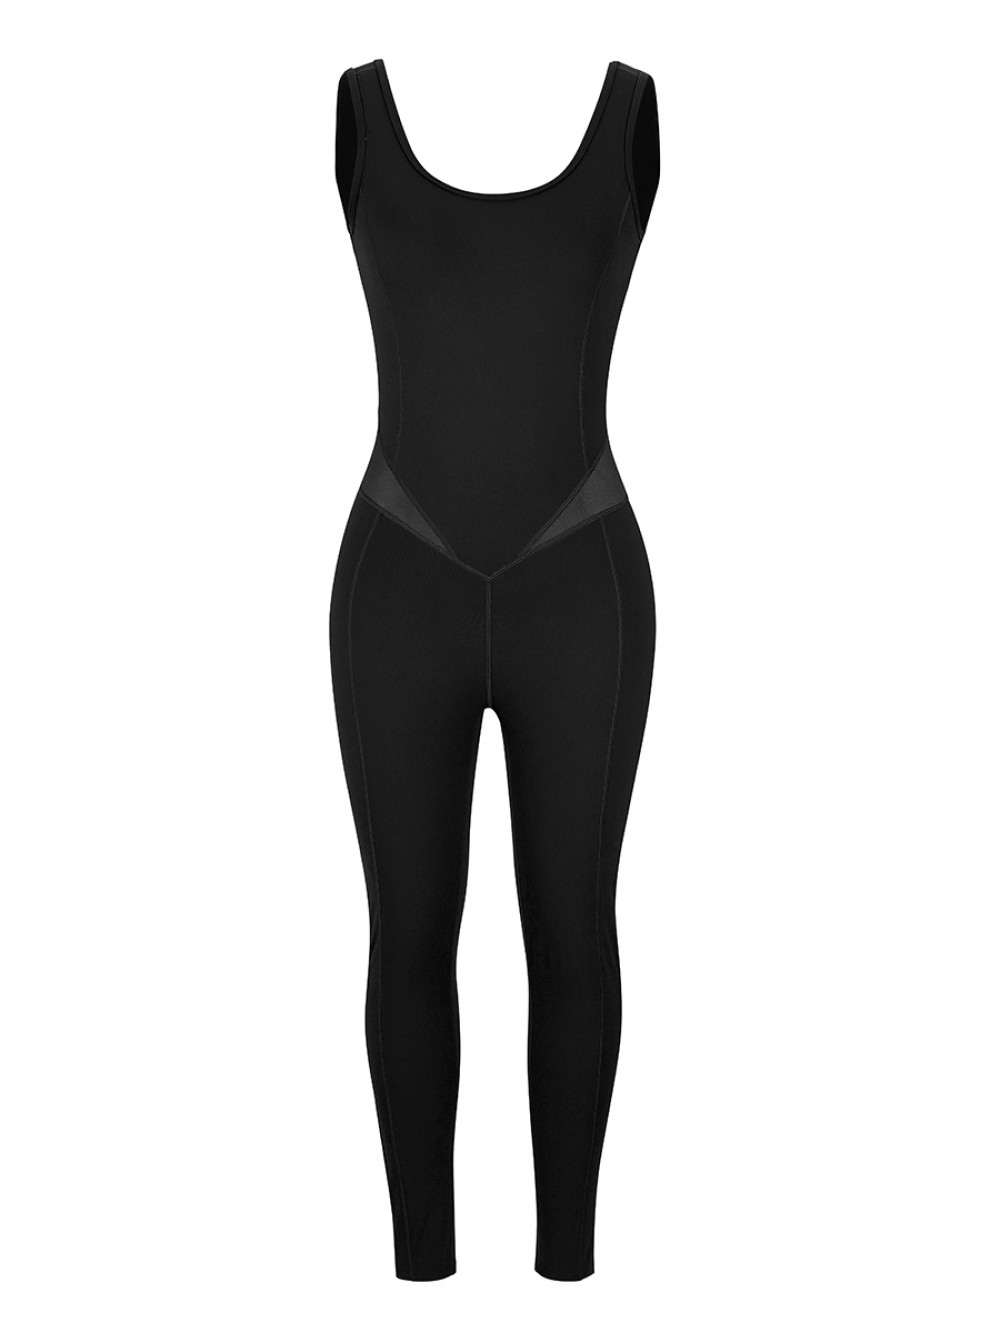 Black Running Bodysuit Wide Strap Ankle Length Exercise